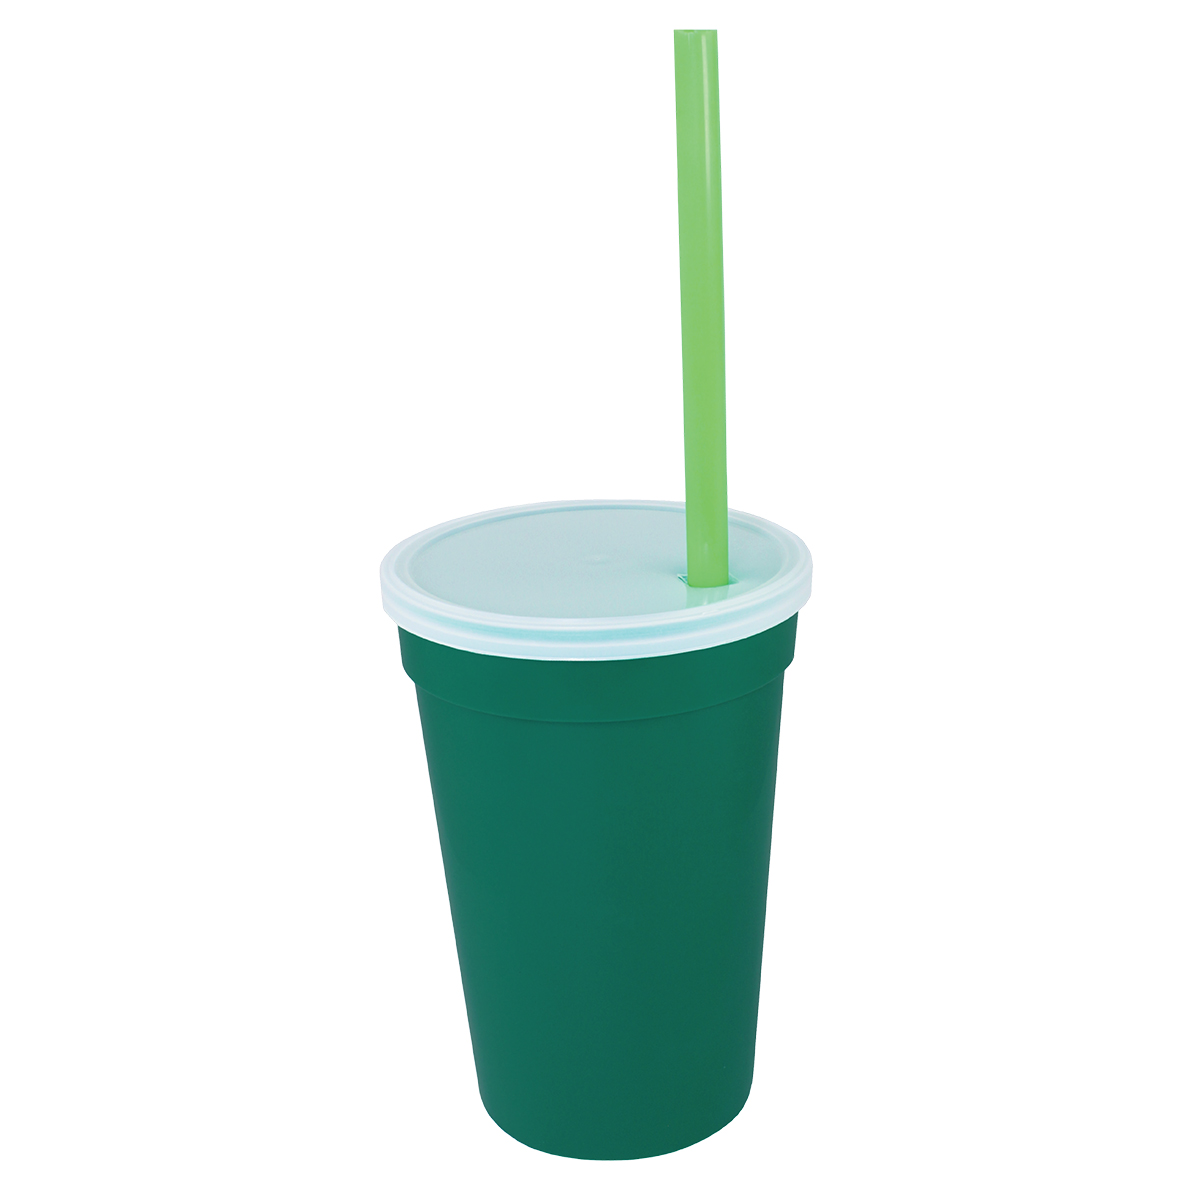 Dark Green with green straw